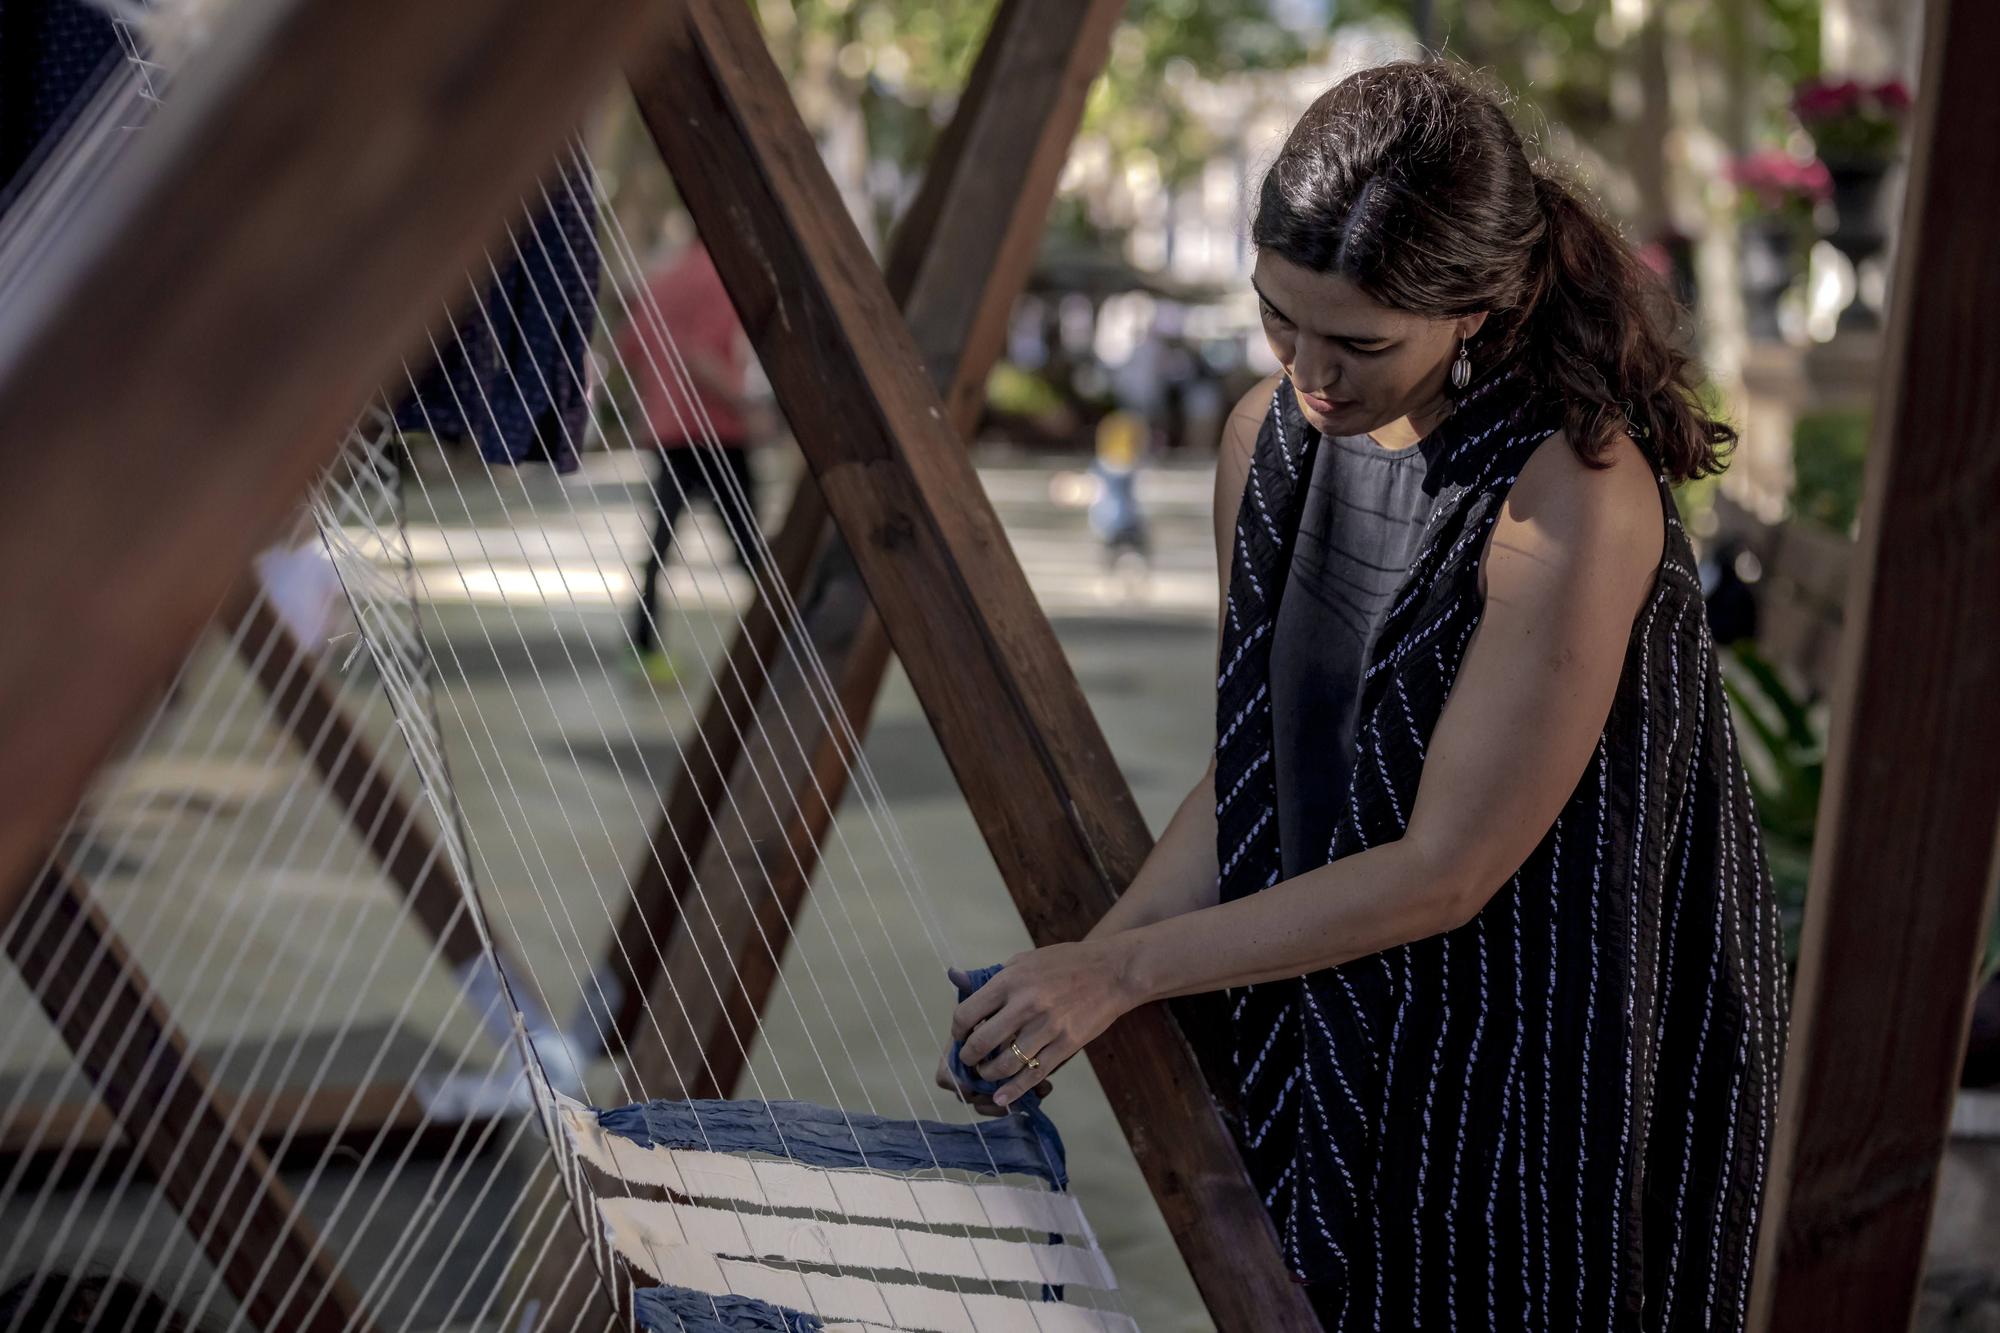 Das Festival XTant feiert die Textilkunst der Welt in Palma de Mallorca